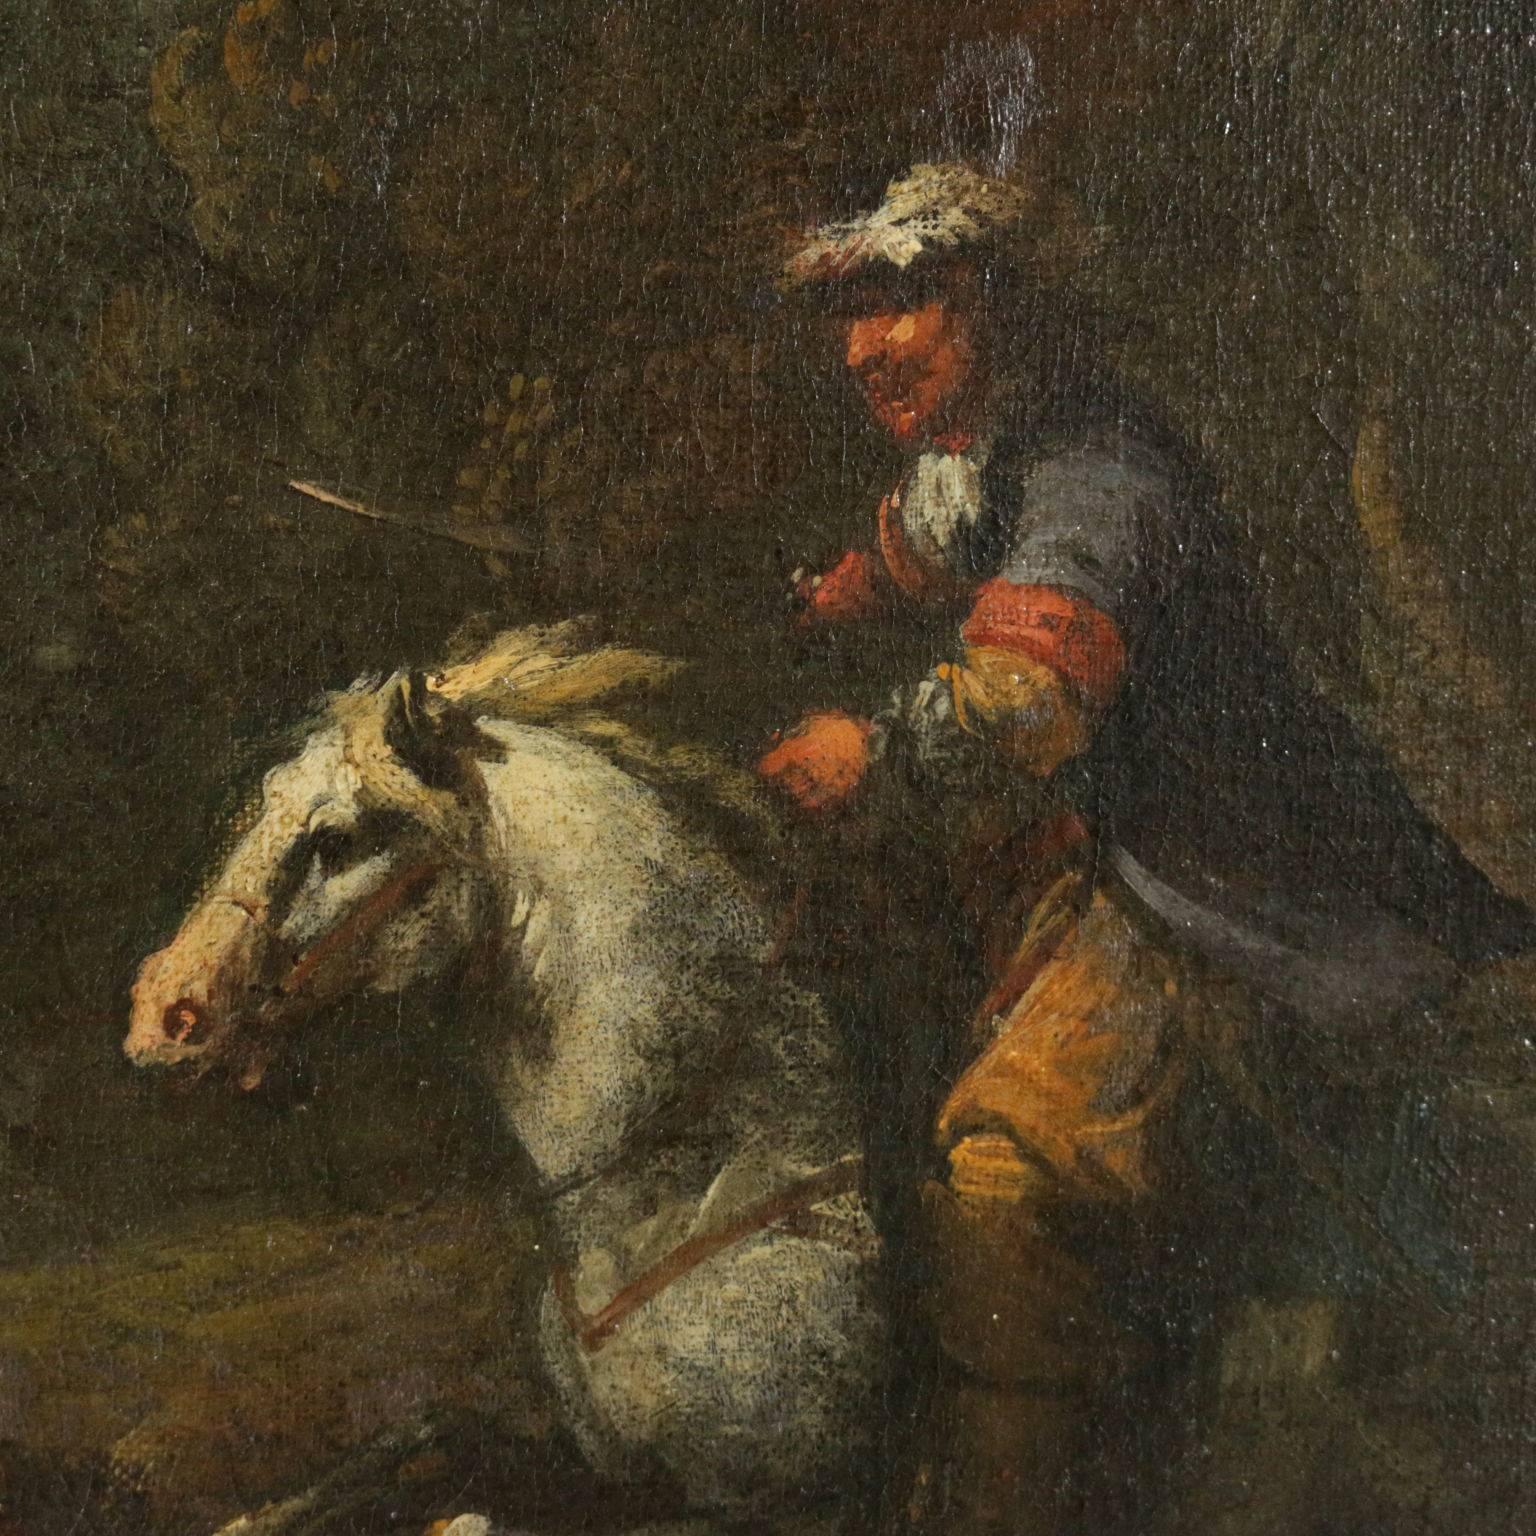 Francesco Casanova Attributable to Hunting Scene Oil on Canvas 18th Century - Brown Landscape Painting by Francesco Giuseppe Casanova